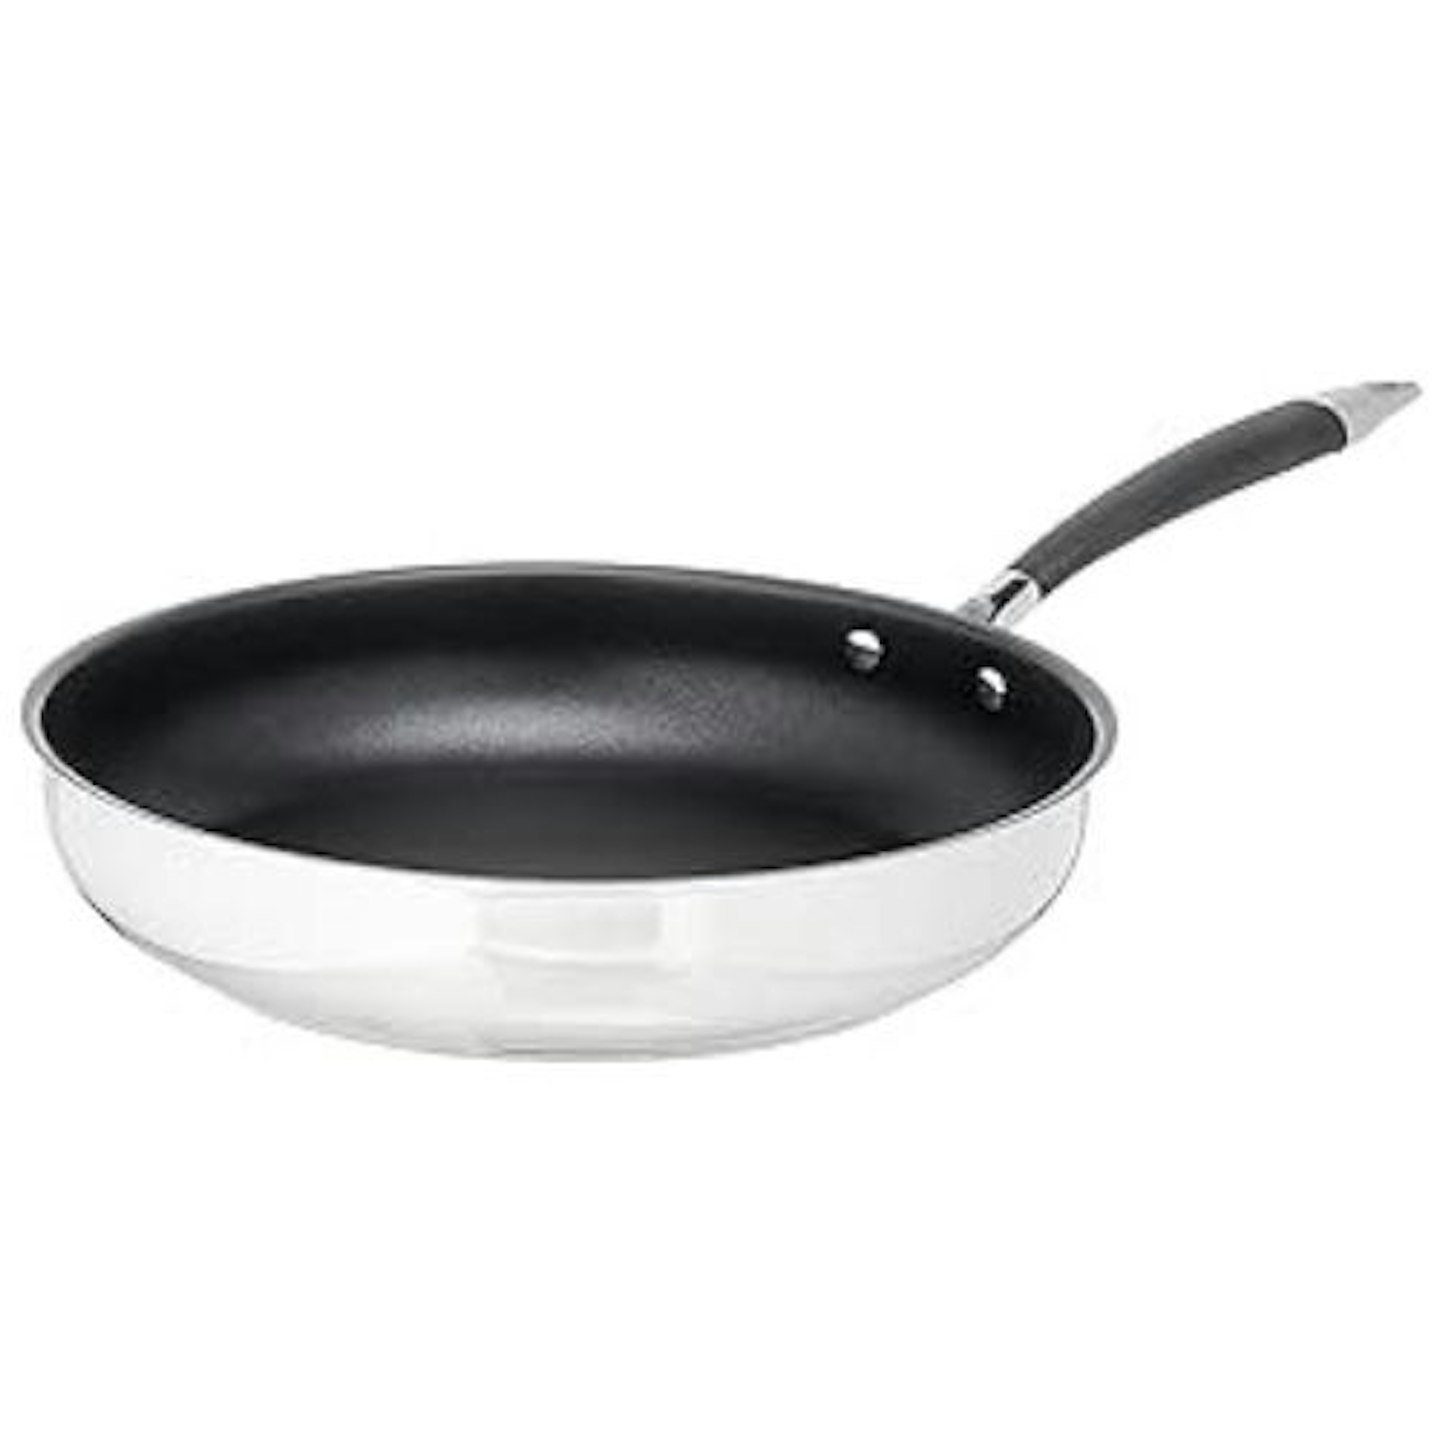 Amazon Basics Frying Pan